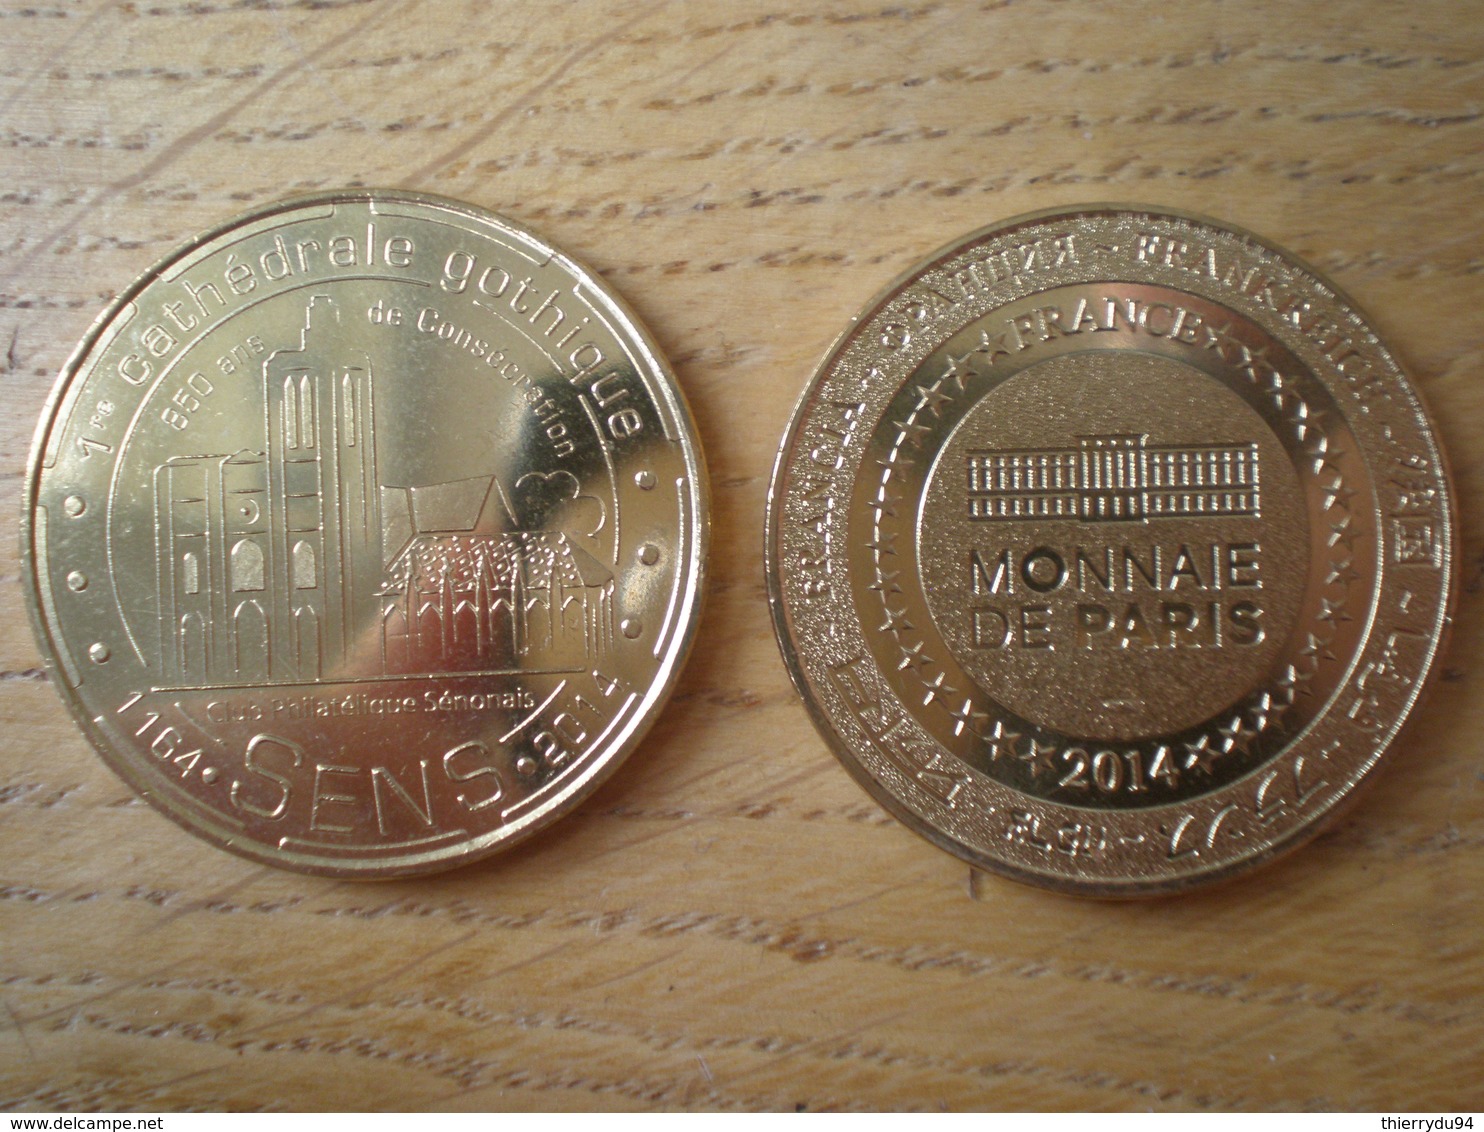 Medaille France Sens Cathedrale Gothique 2014 Que Prix + Port Arthus Bertrand Paypal Skrill Bitcoin OK - 2014